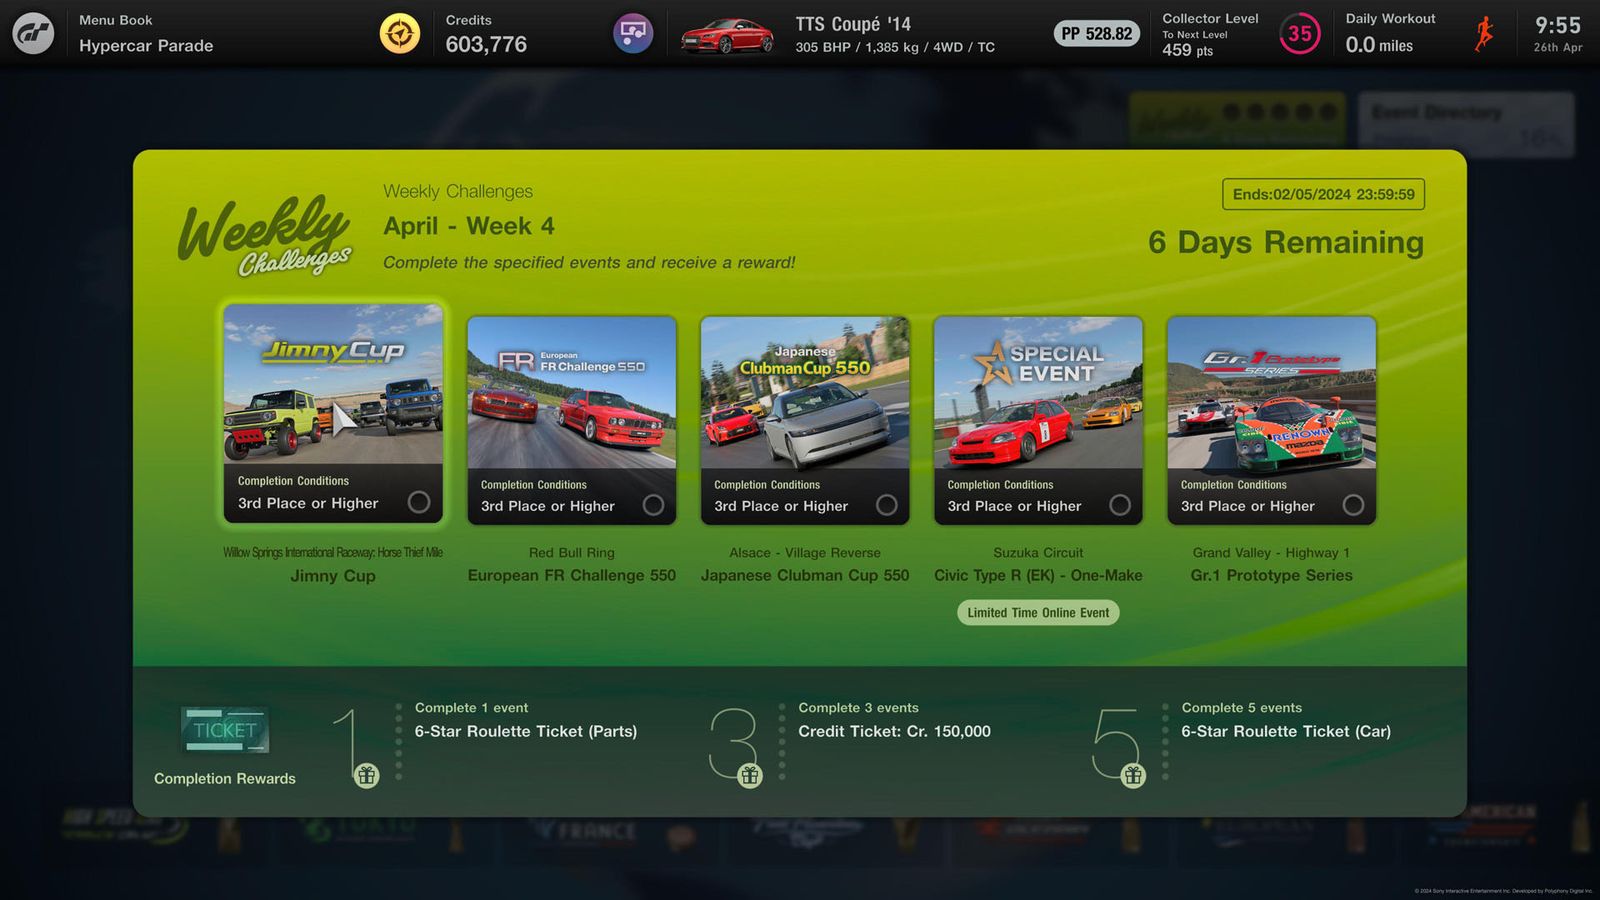 Gran Turismo 7 Weekly Challenges April Week 4 events